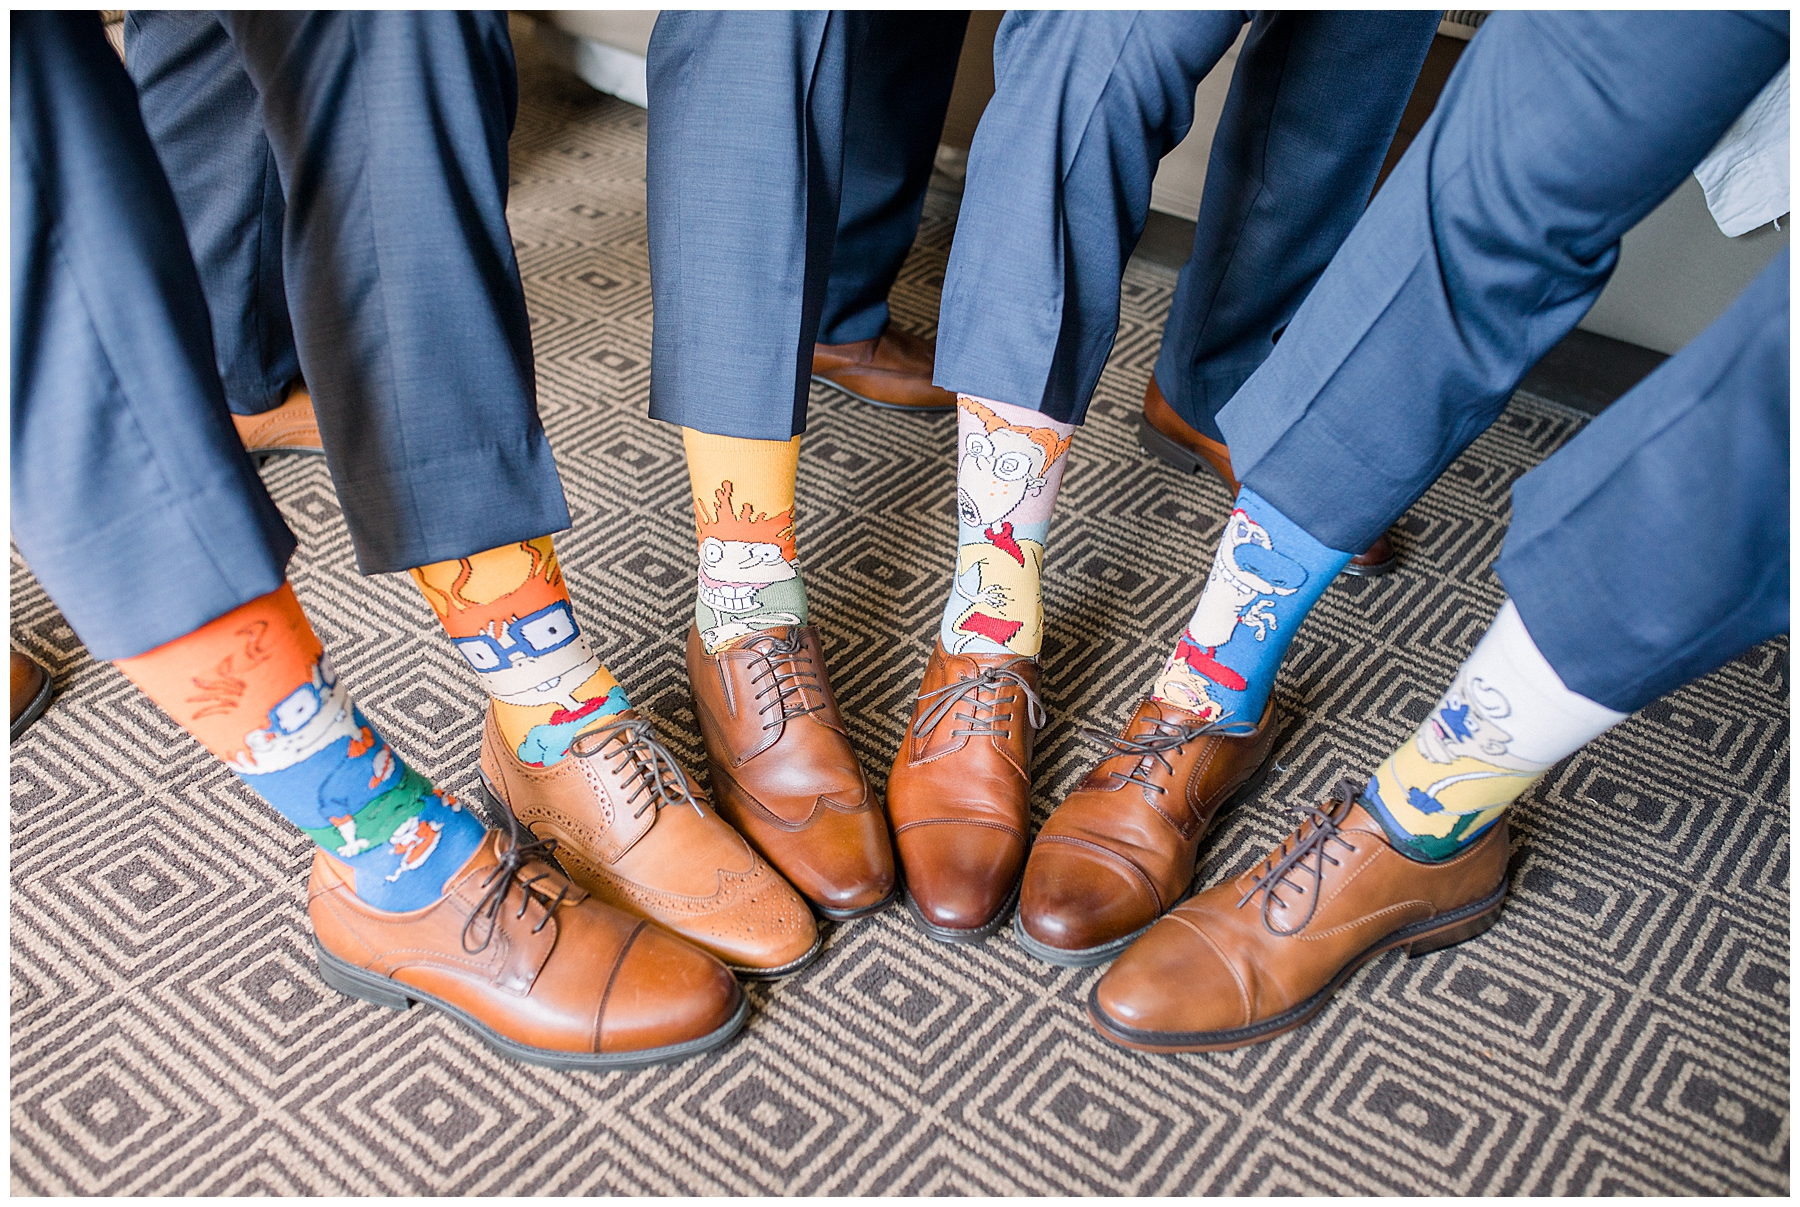 Groom and Groomsmen show off socks before wedding ceremony